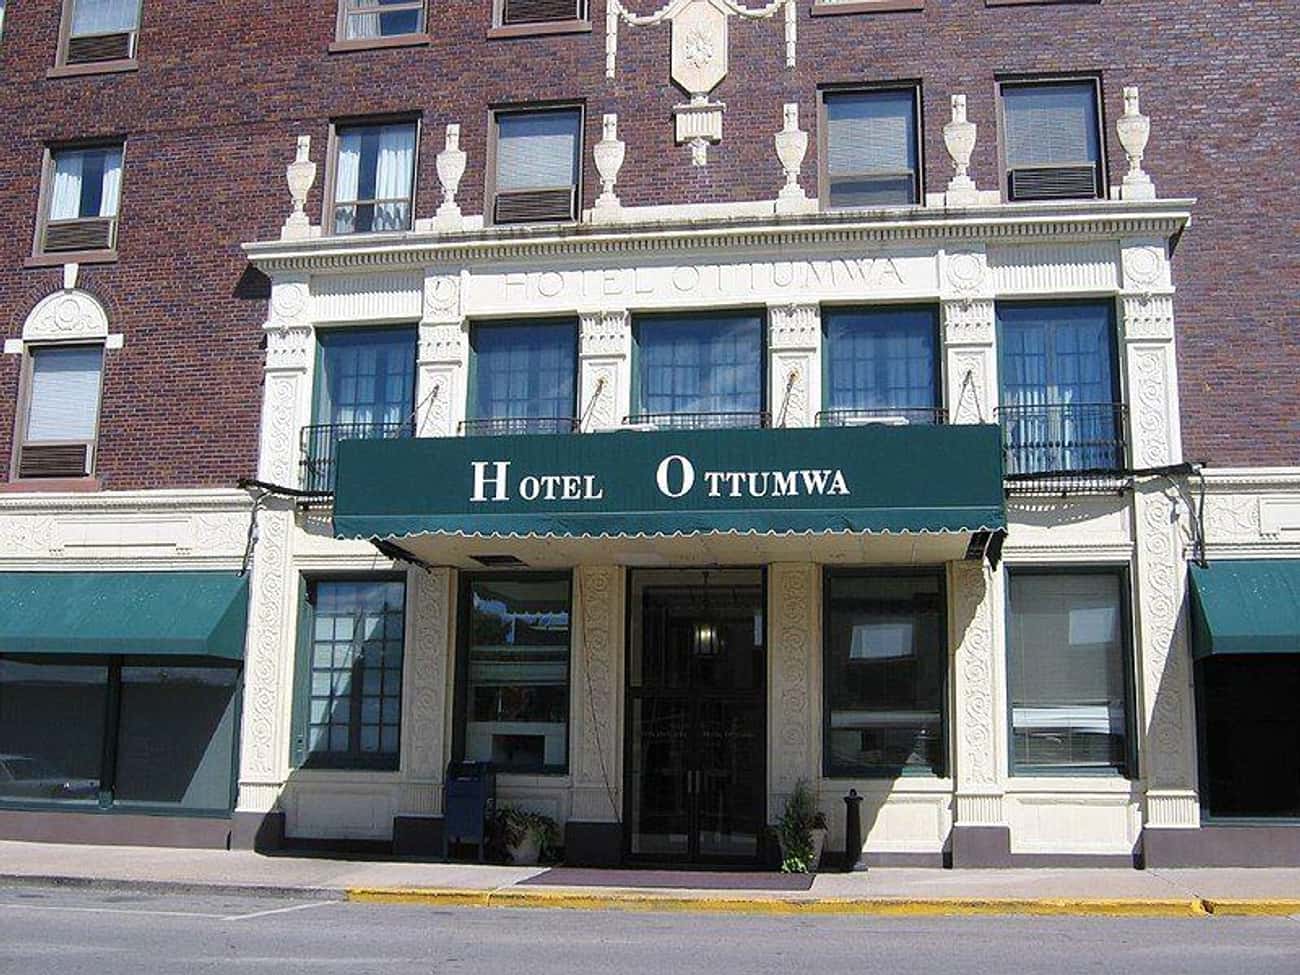 Iowa: Hotel Ottumwa